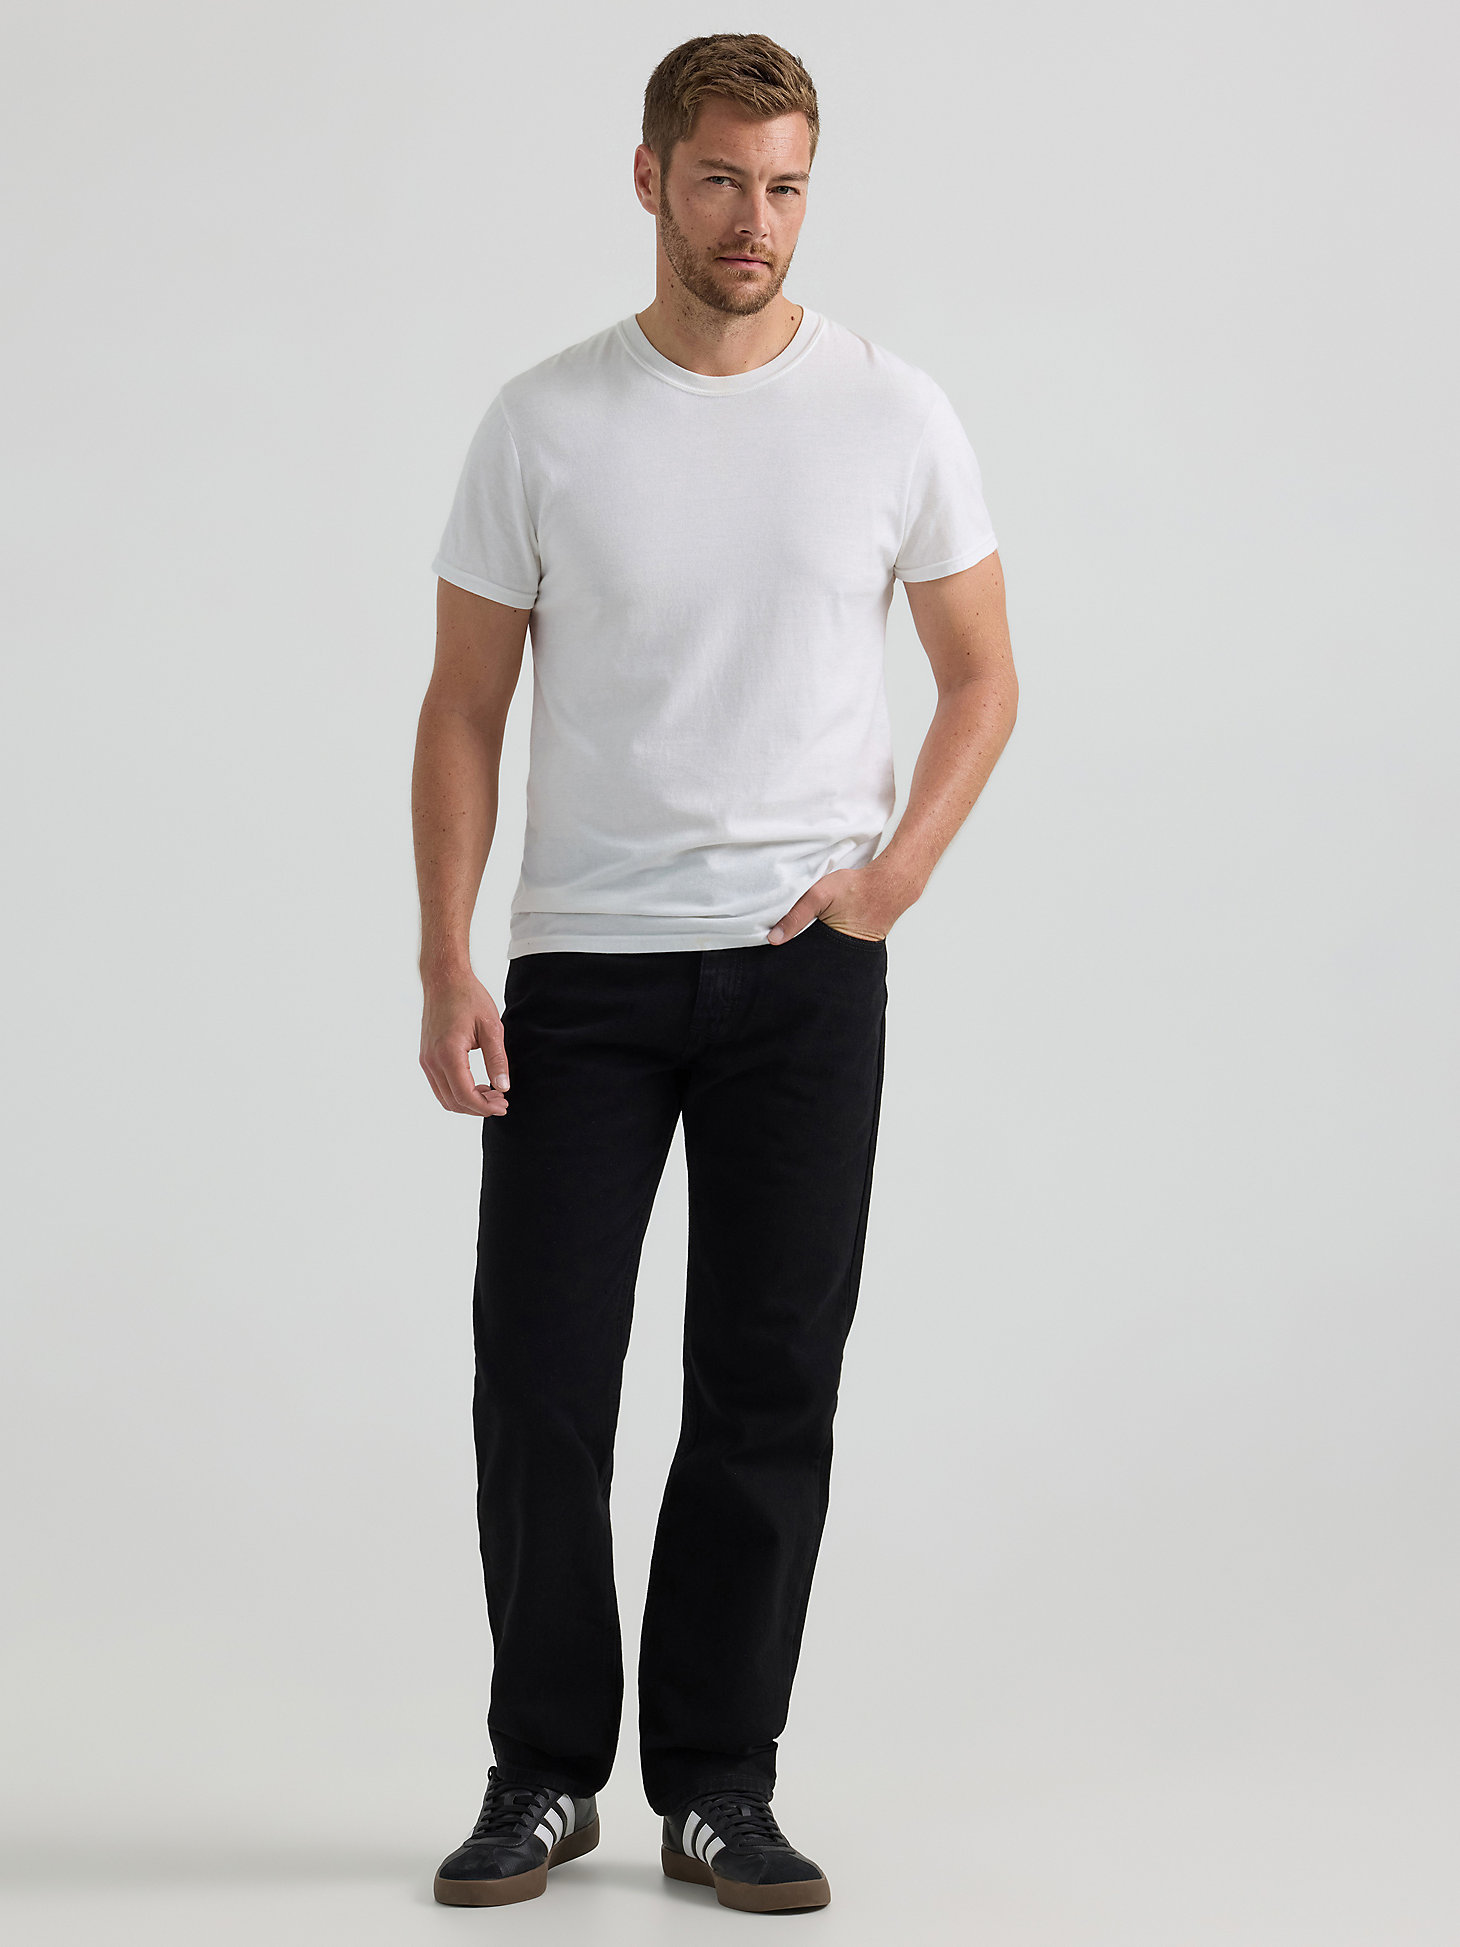 Men’s  100% Cotton Regular Fit Straight Leg Jeans in Double Black alternative view 1